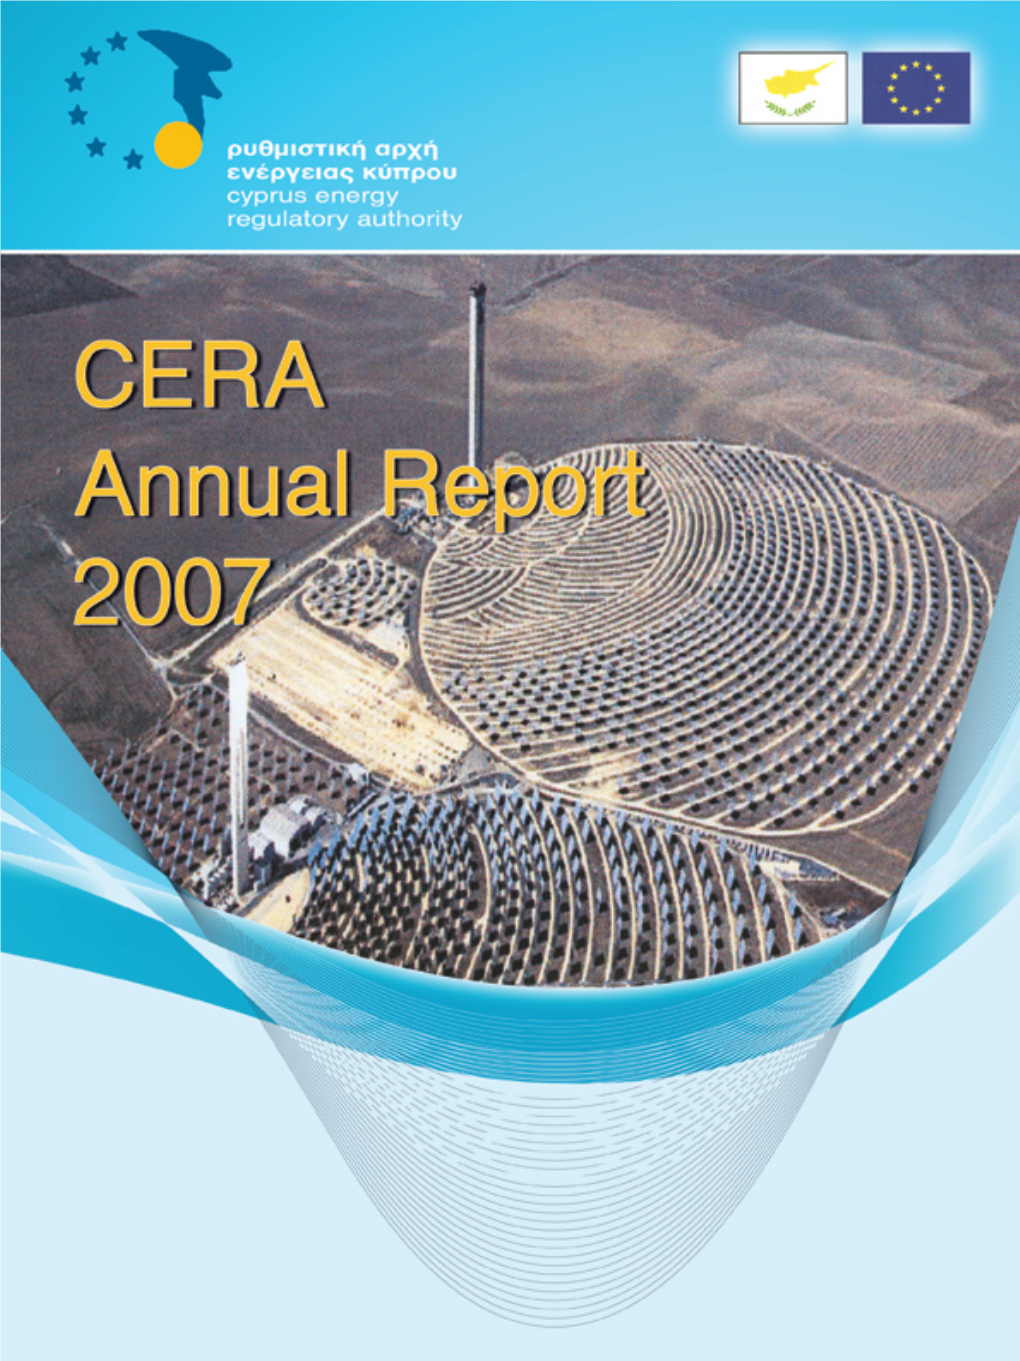 Cyprus Energy Regulatory Authority (CERA)